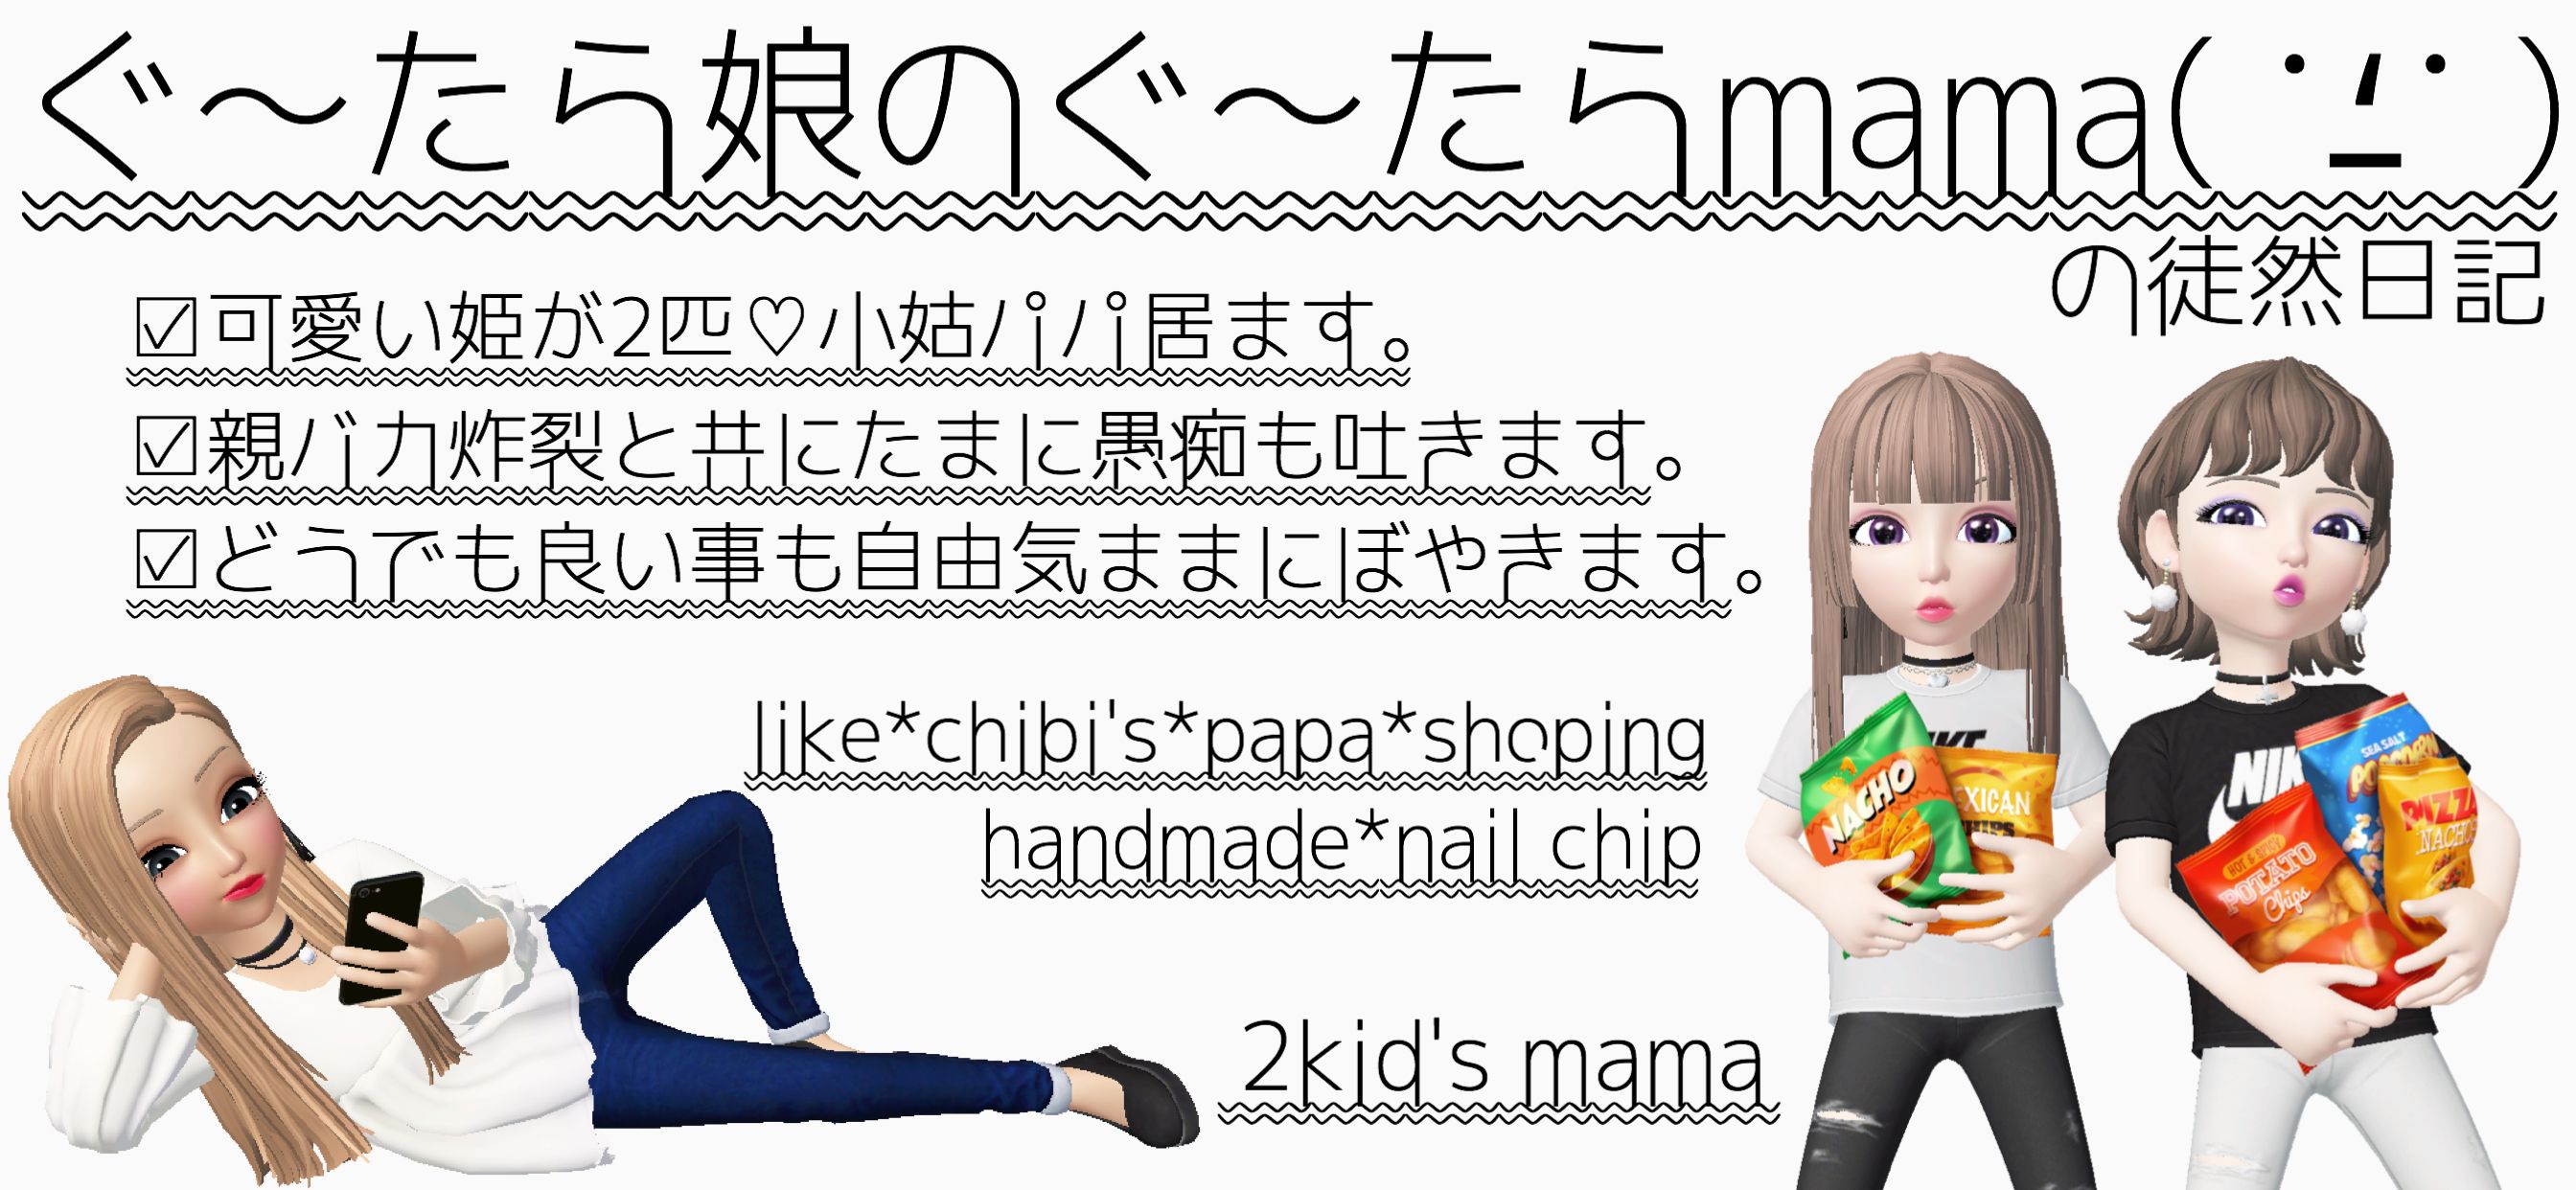 2kids mama 〜 - 楽天ブログ